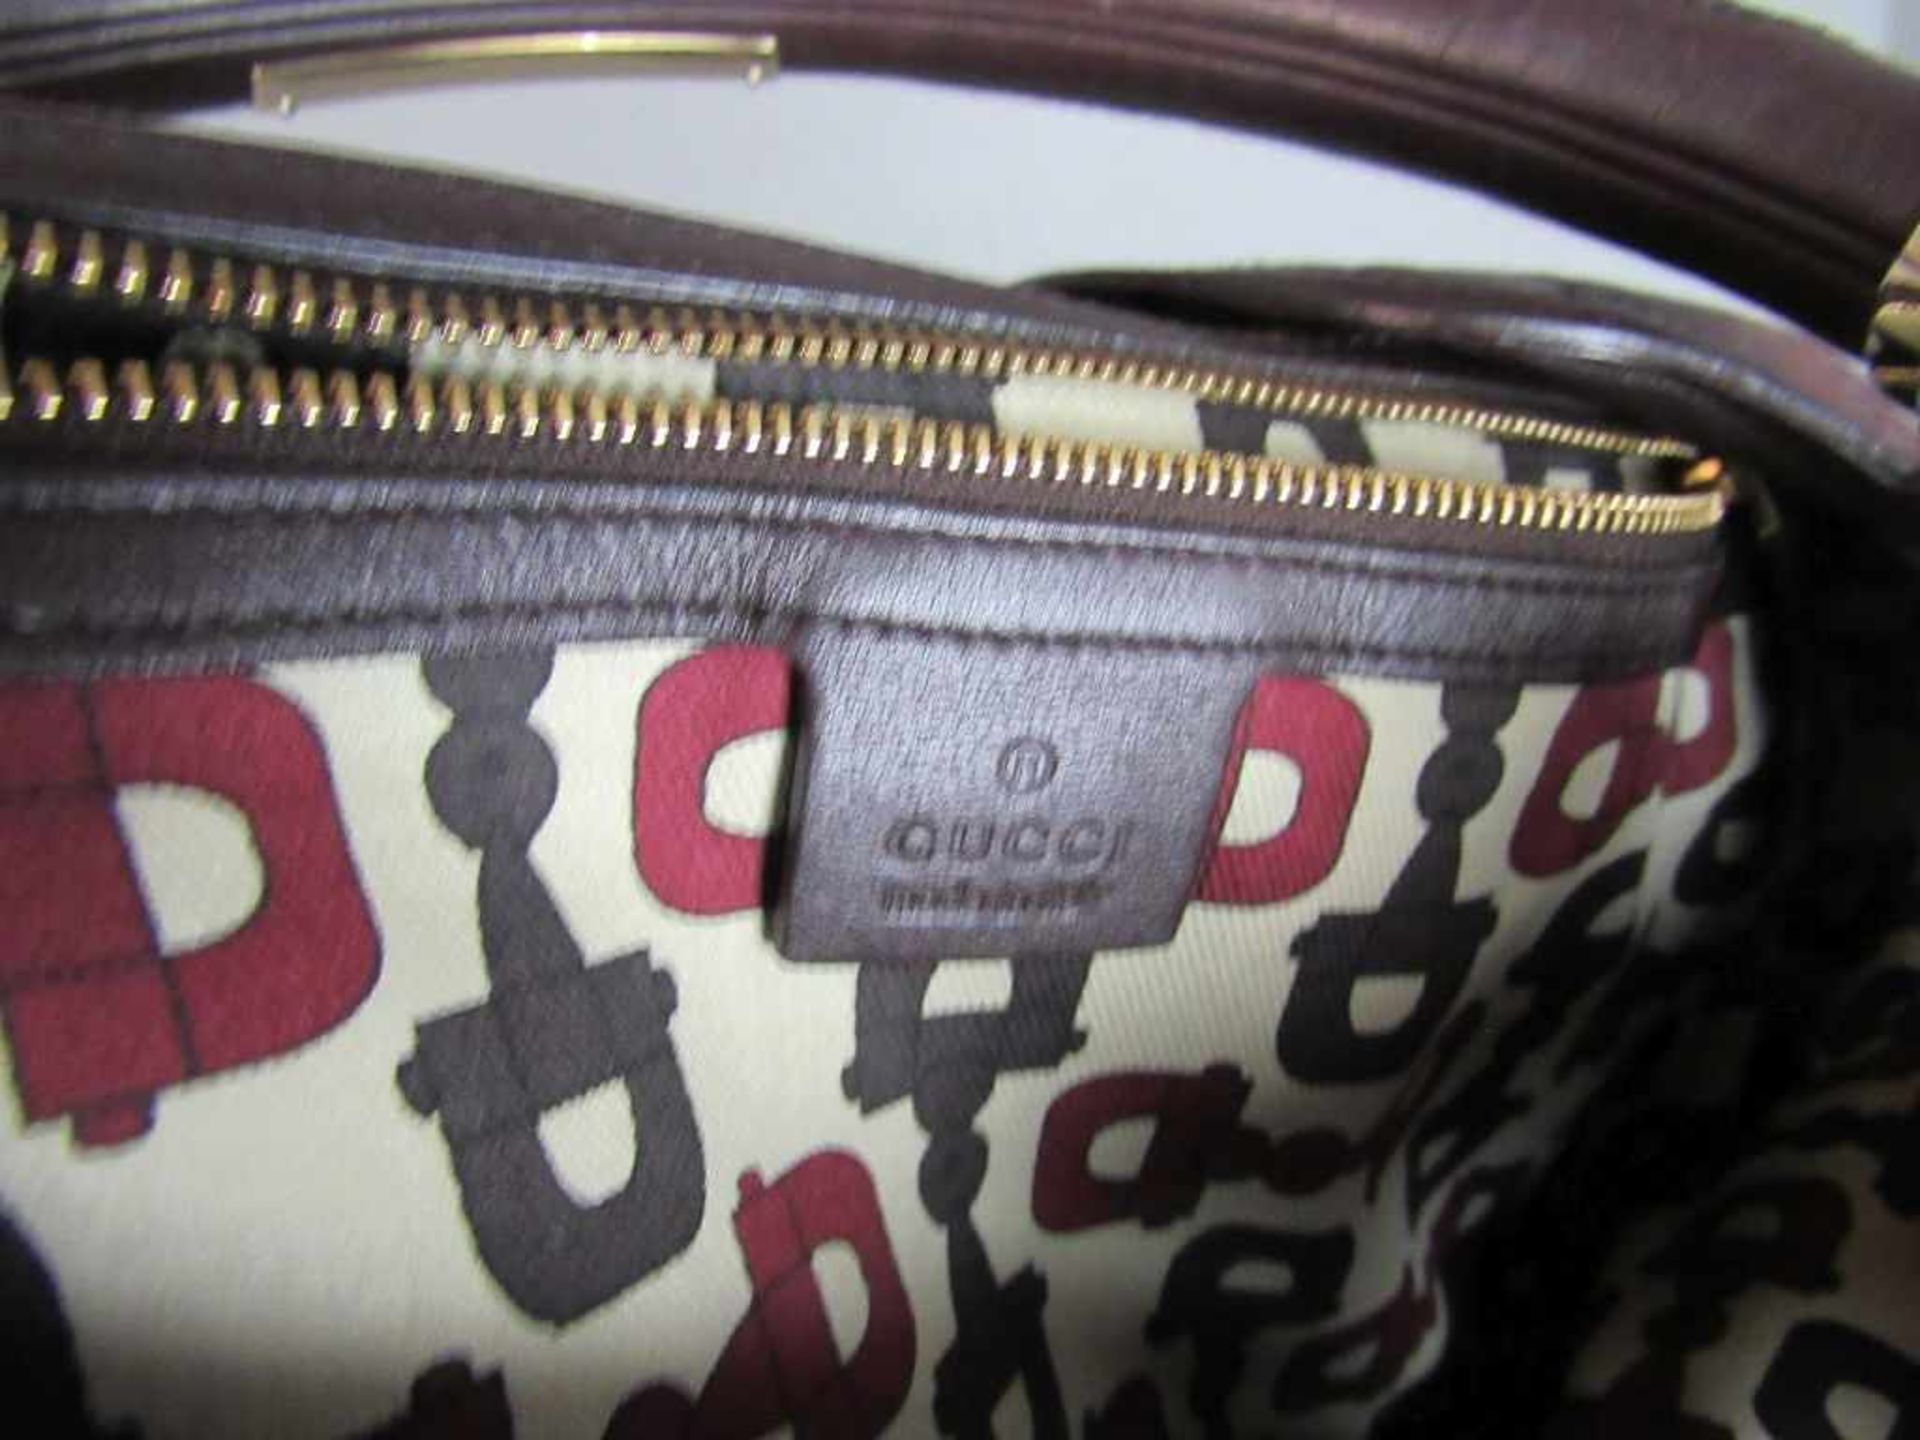 Handtasche Gucci geprägtes Leder ca.48x50cm- - -20.00 % buyer's premium on the hammer price19.00 % - Image 3 of 6